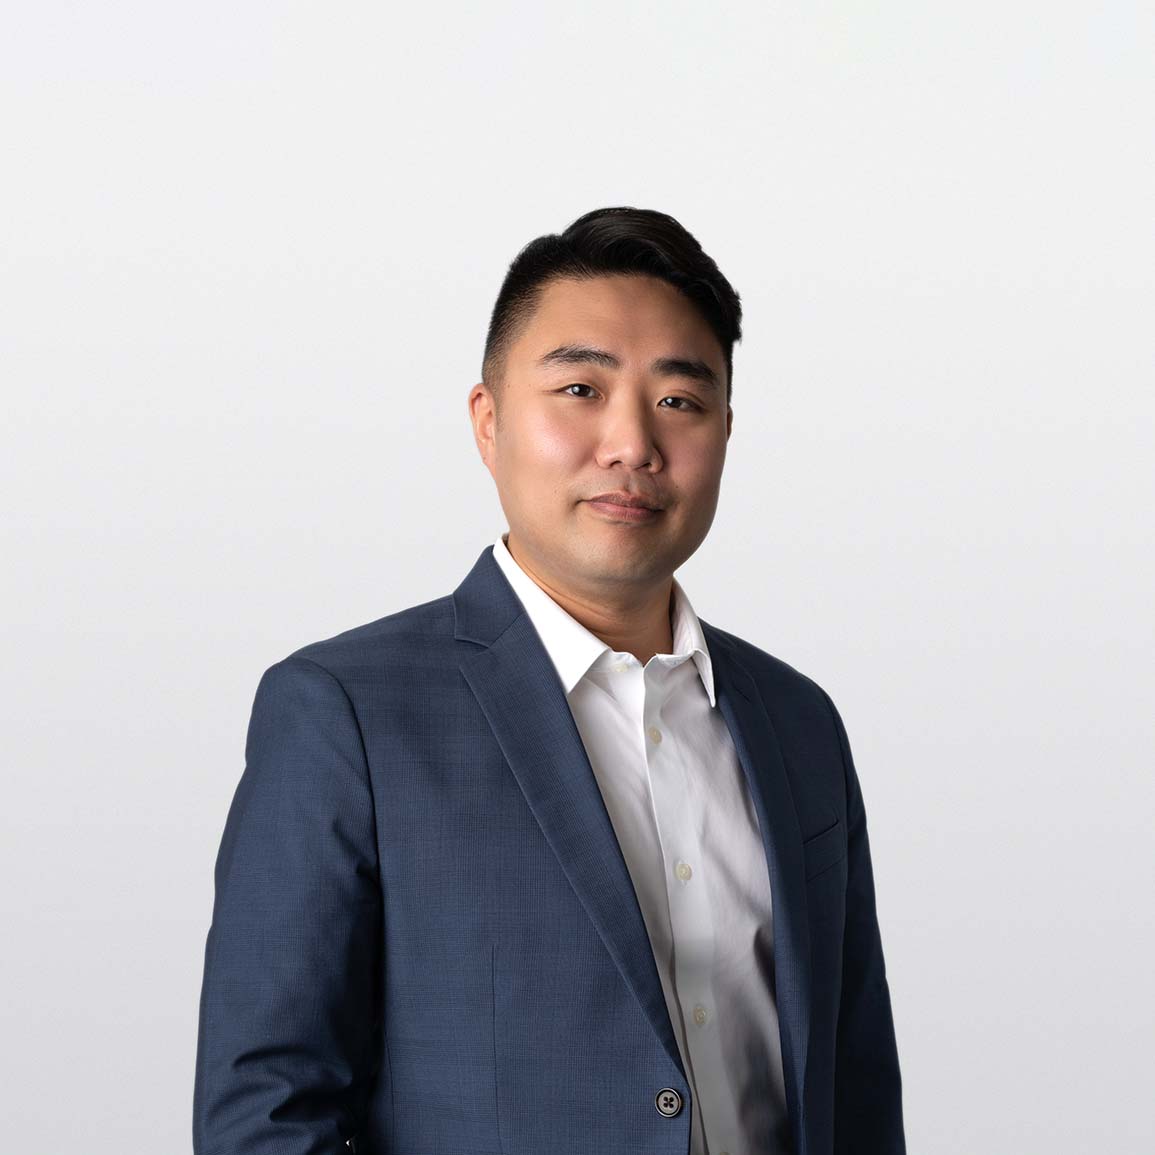 Image of Steve Kwon, ATB Senior Financial Advisor, on white background.